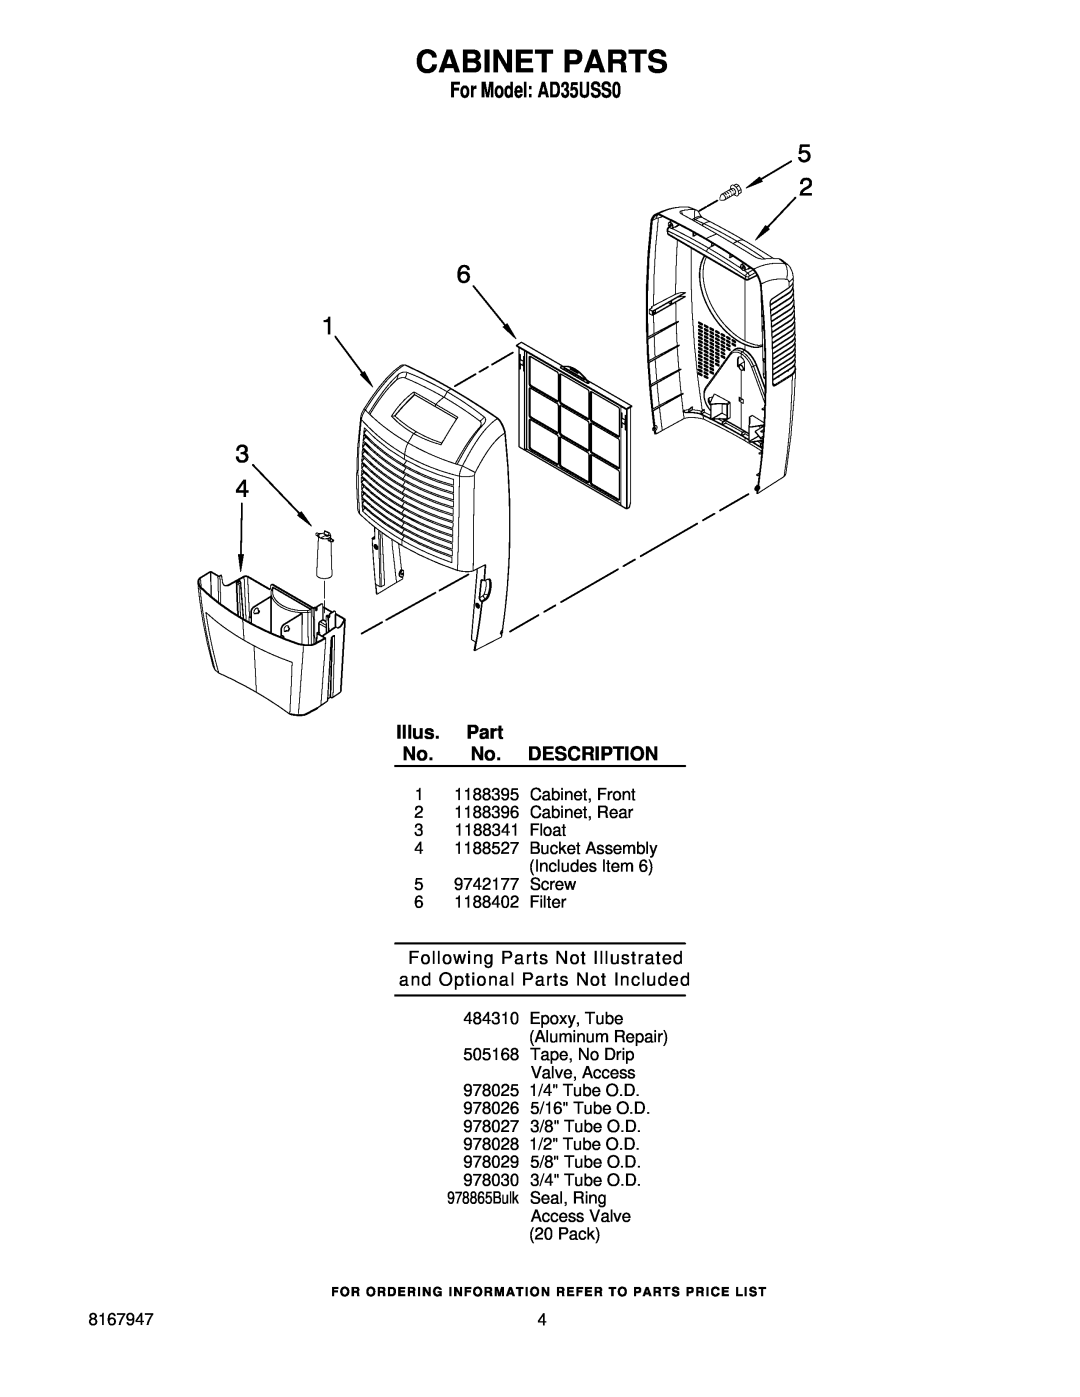 Whirlpool manual Cabinet Parts, For Model AD35USS0, Illus. Part No. No. DESCRIPTION 